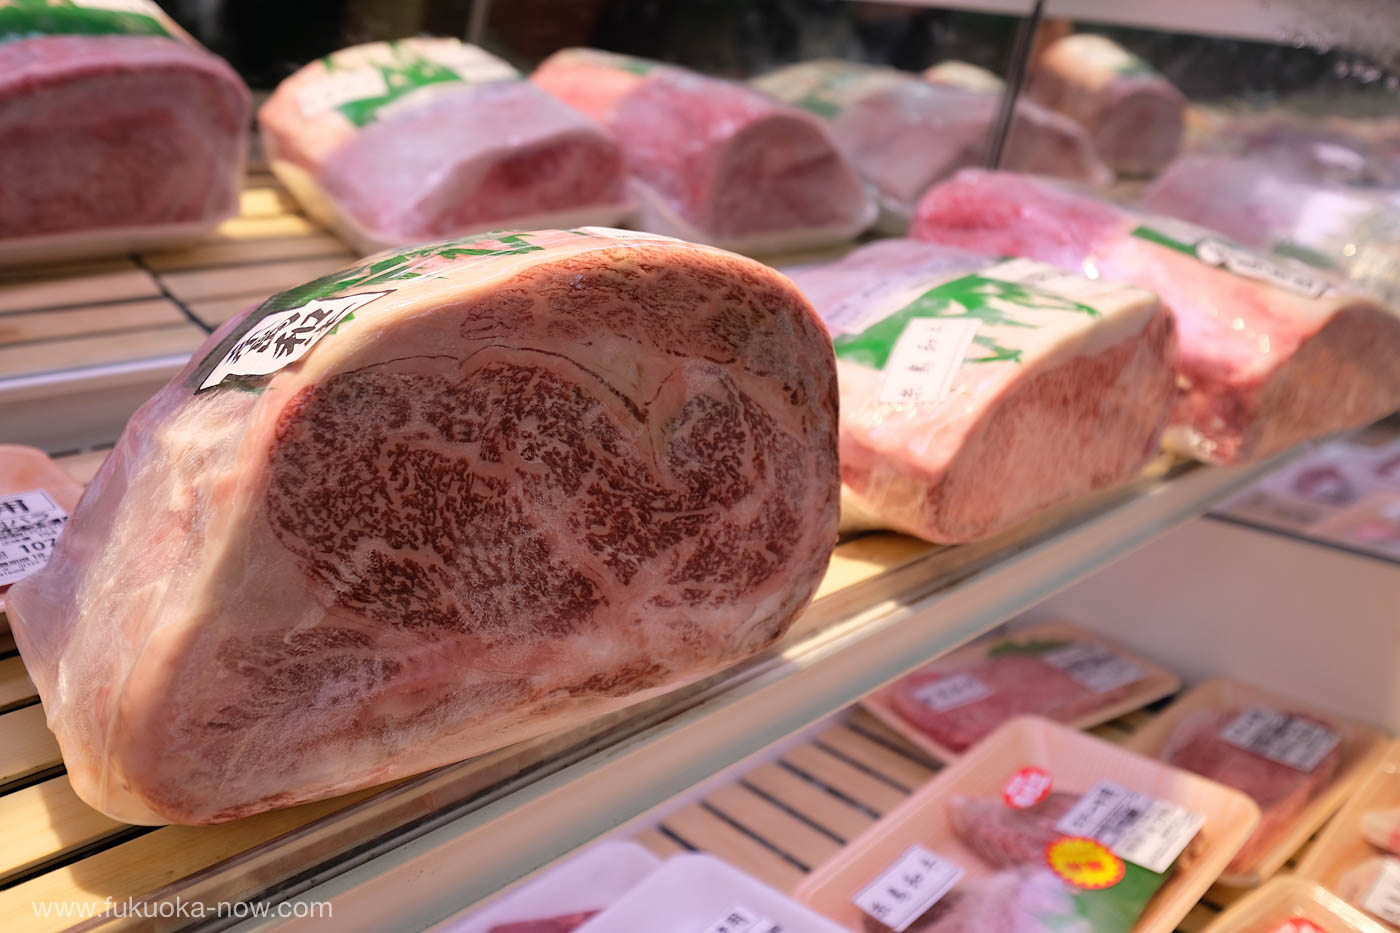 Itoshima butcher meet shop, Toraya Meat Center - Itoshima Wagyu beef, 糸島の肉屋の老舗、トラヤミートセンターで販売している糸島和牛